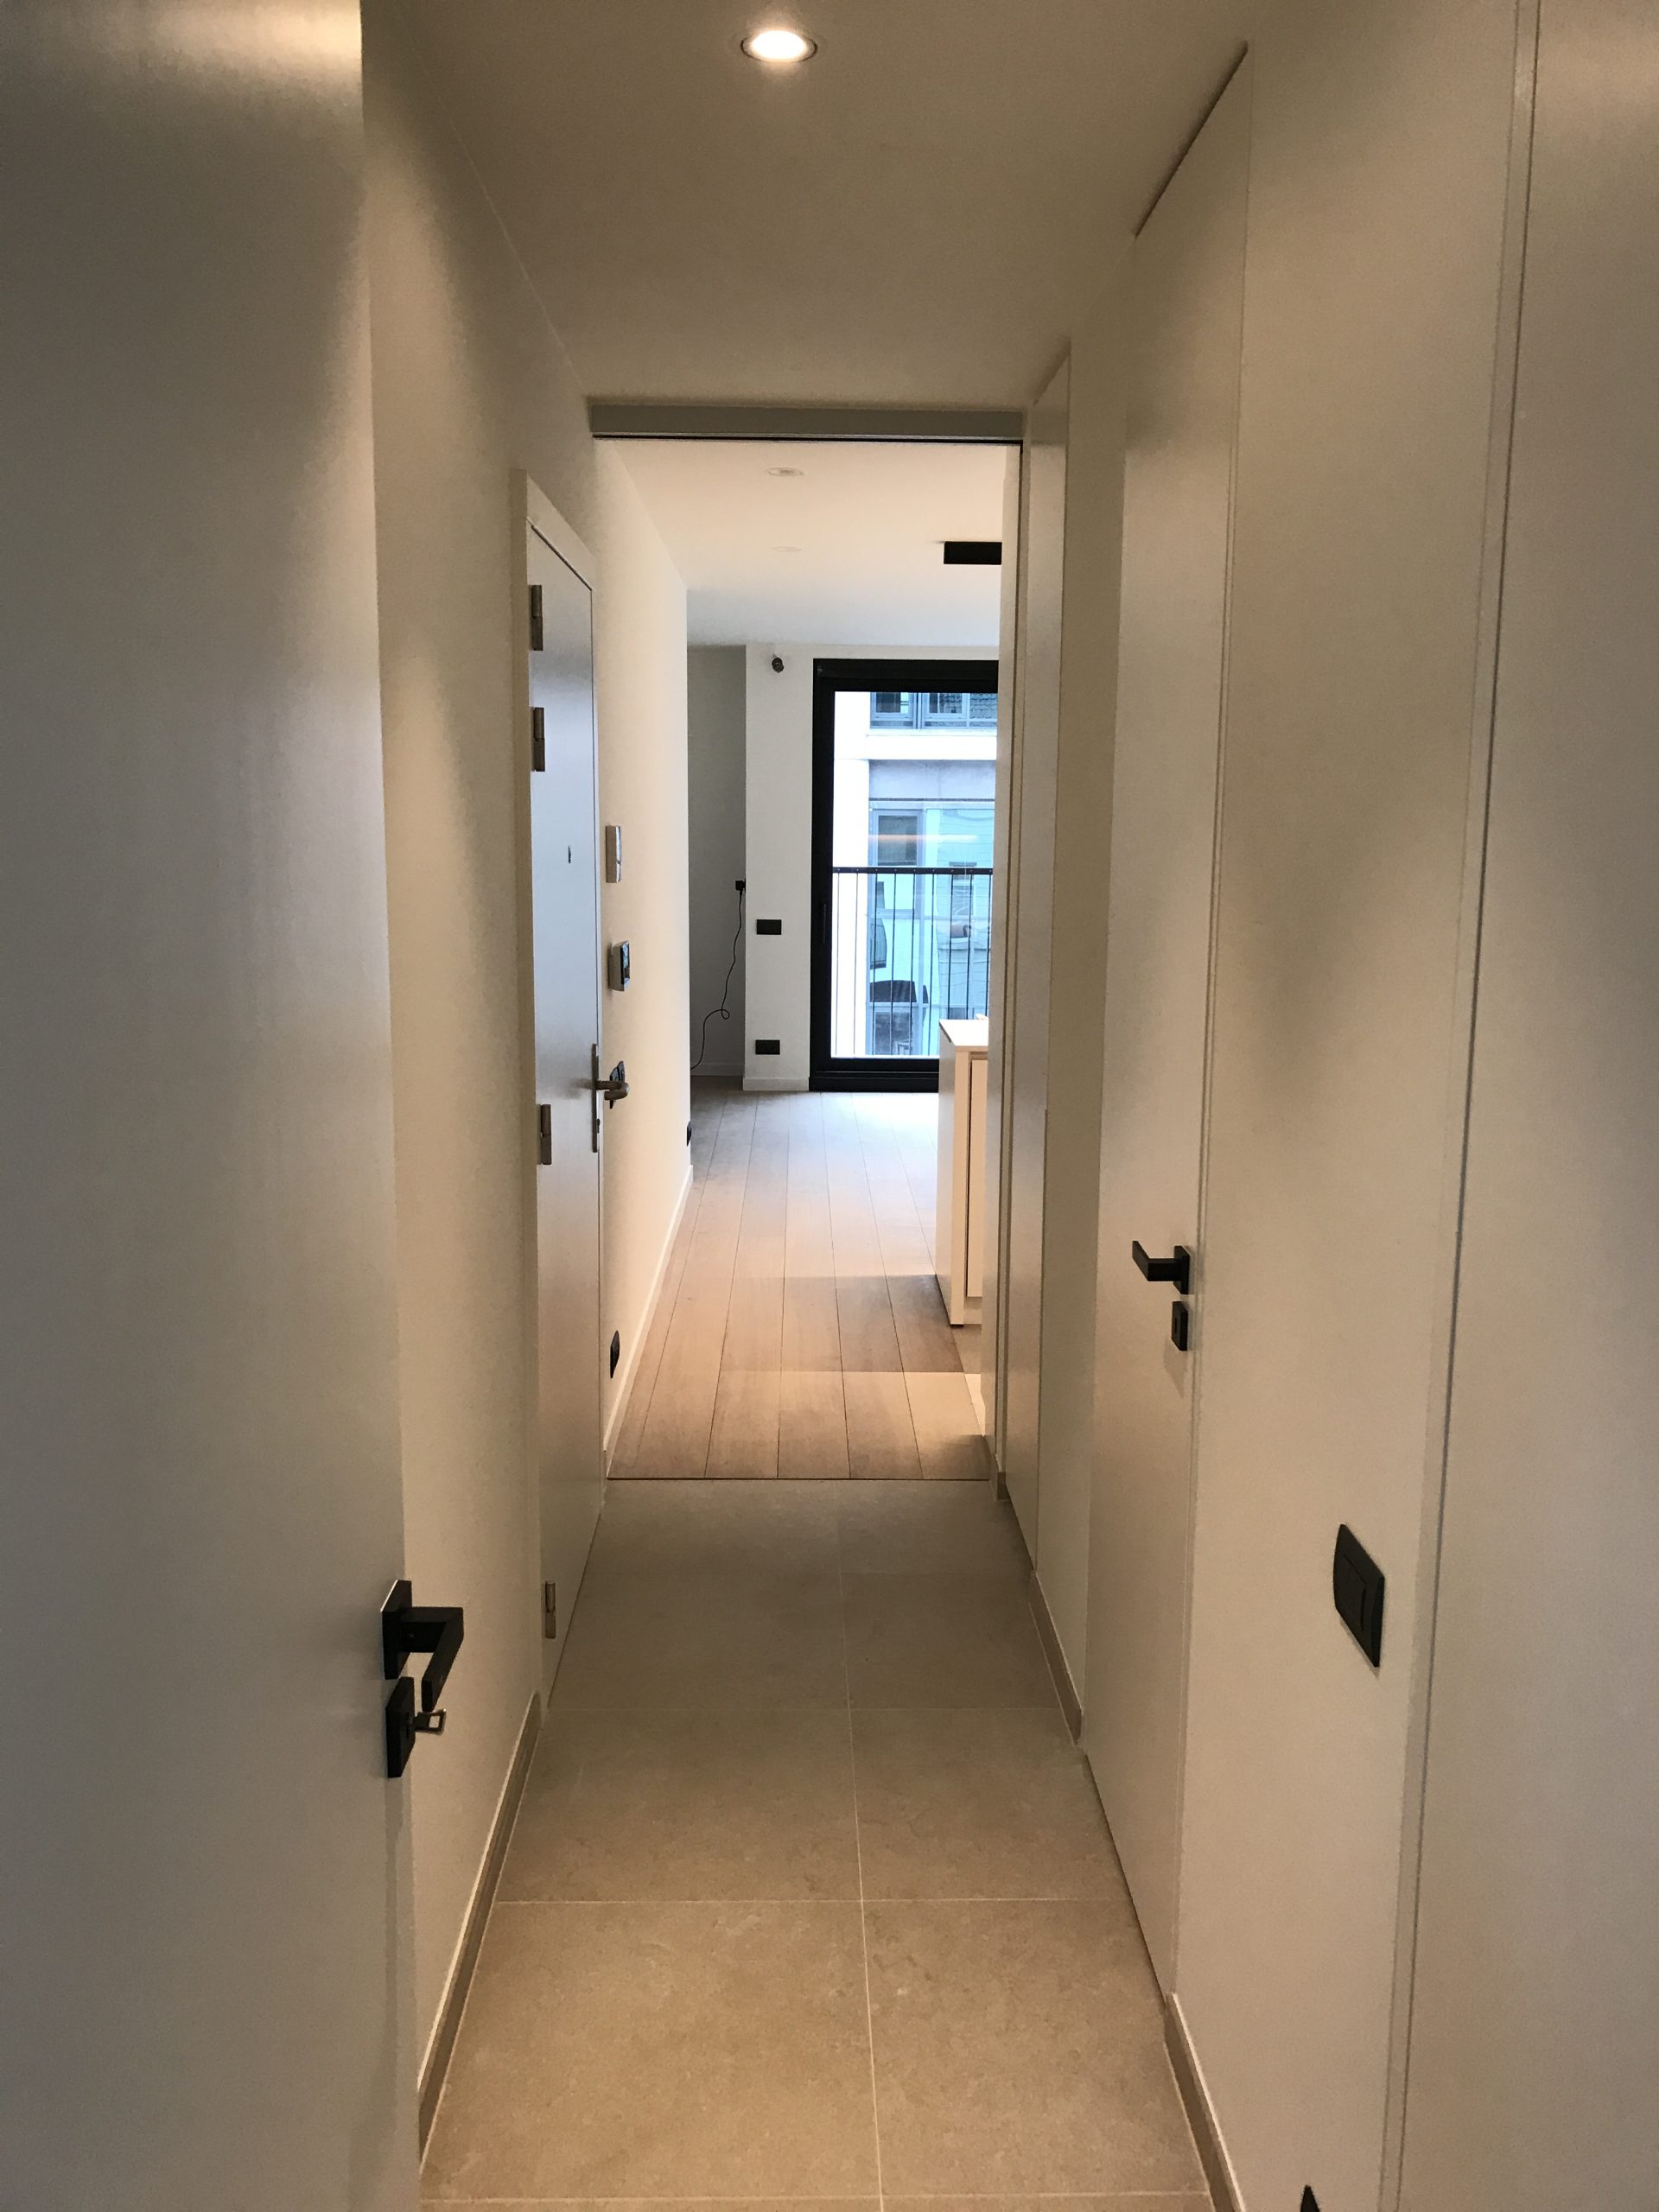 Hallway - 1-bedroom apartment for rent in Ghent